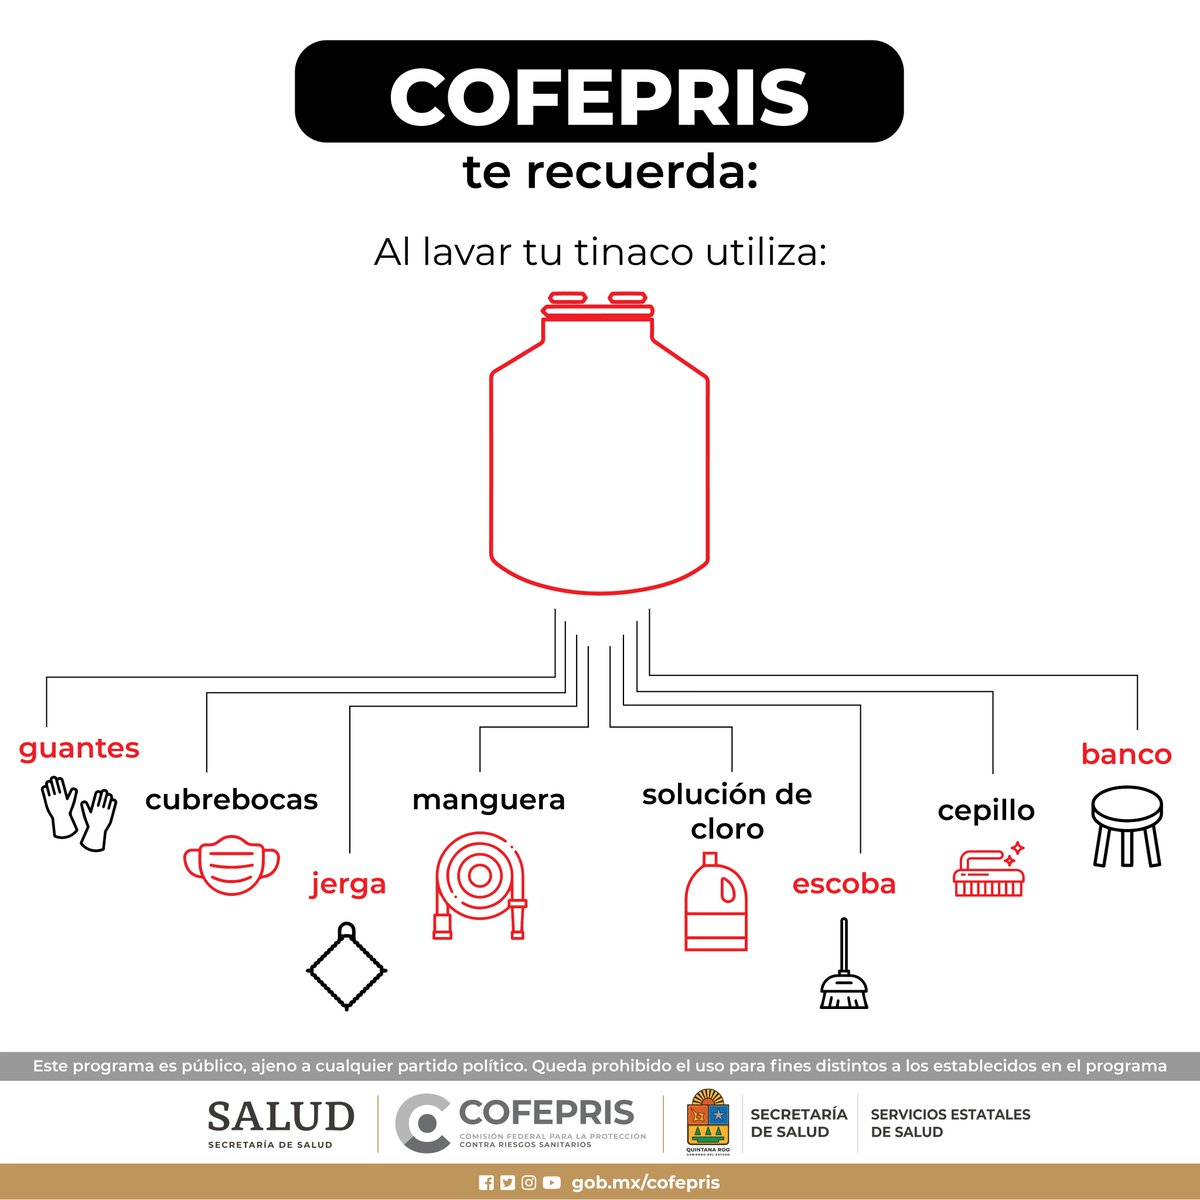 Al lavar tu tinaco utiliza lo siguiente:
@COFEPRIS 
#CofeprisTeProtege
#cofepriságil
#CofeprisJusta
#CofeprisTransparente
#Emergencias
#DprisQroo